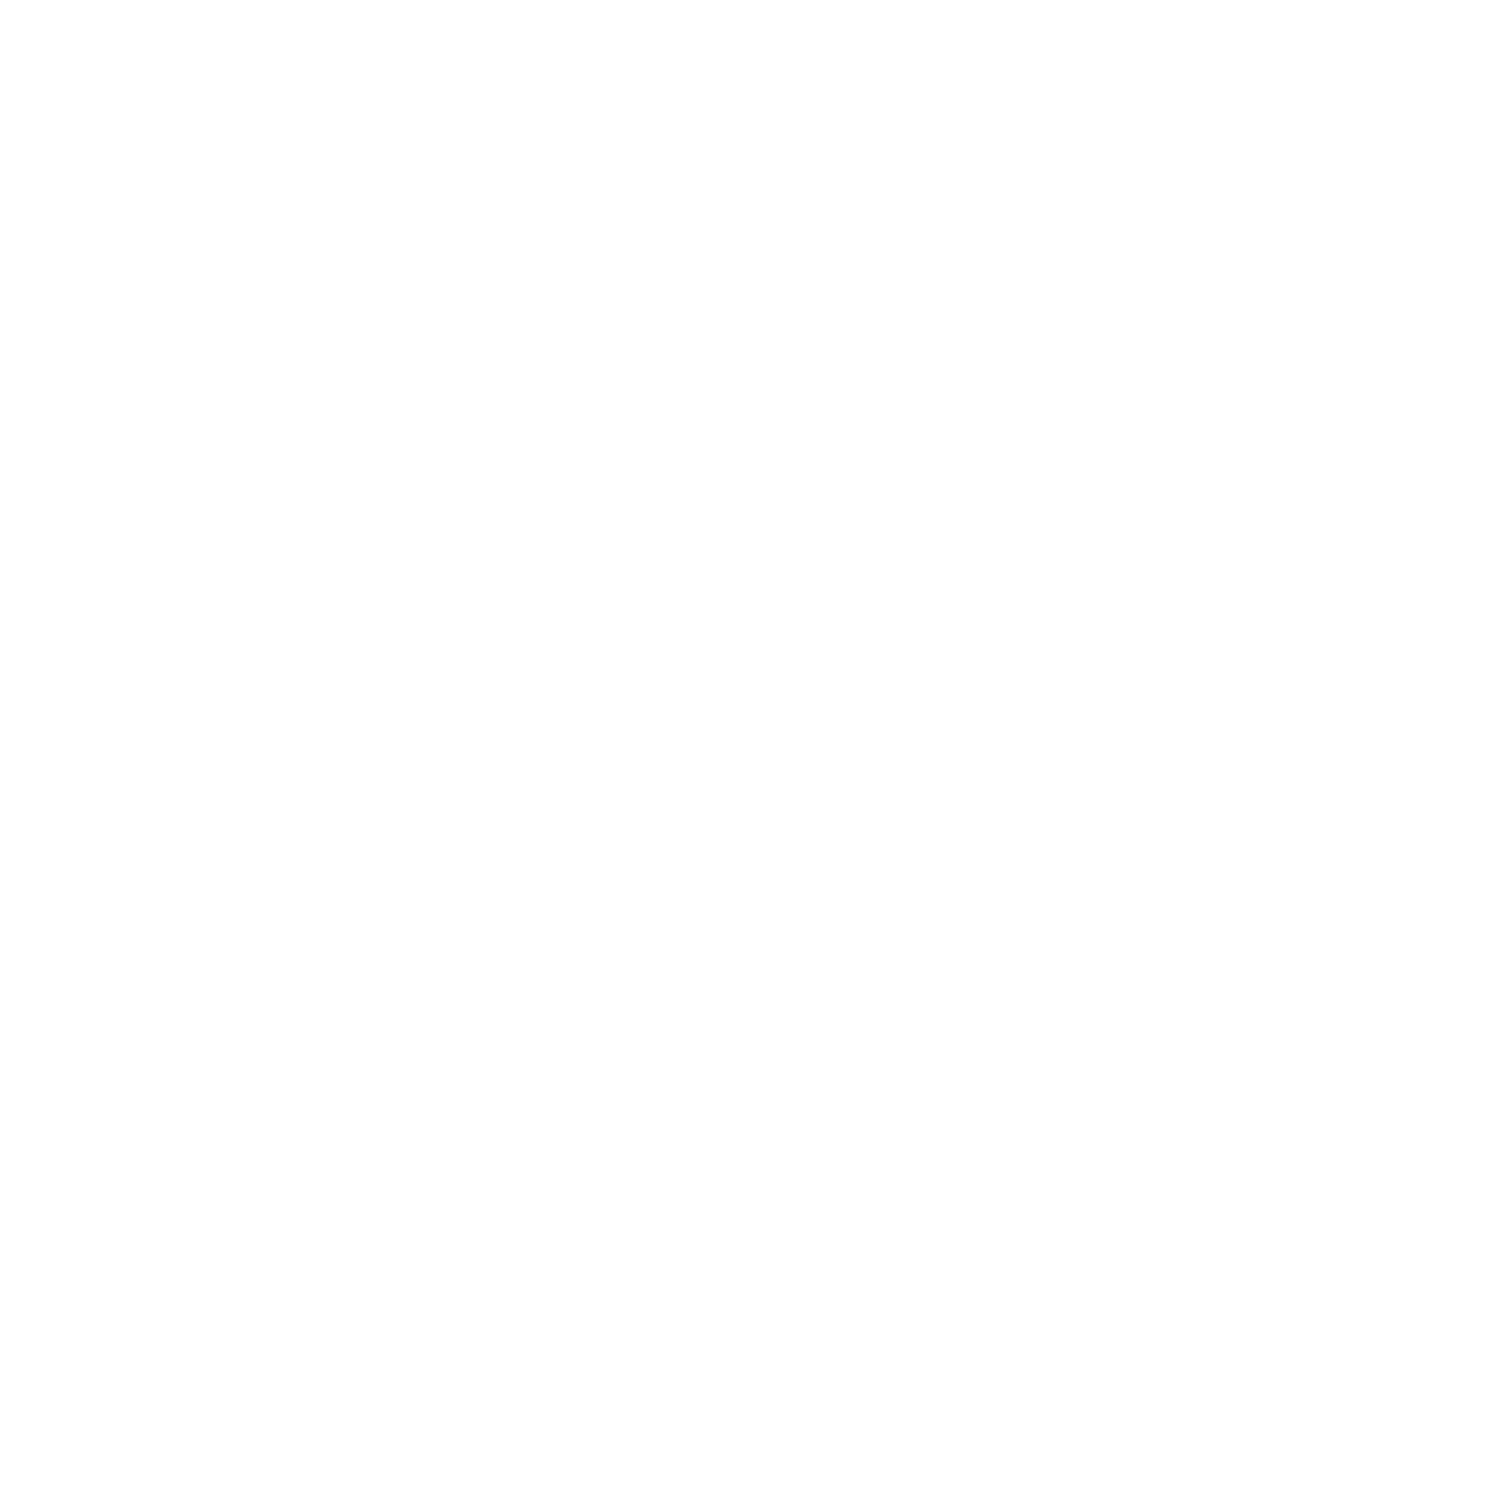 Mangata Media